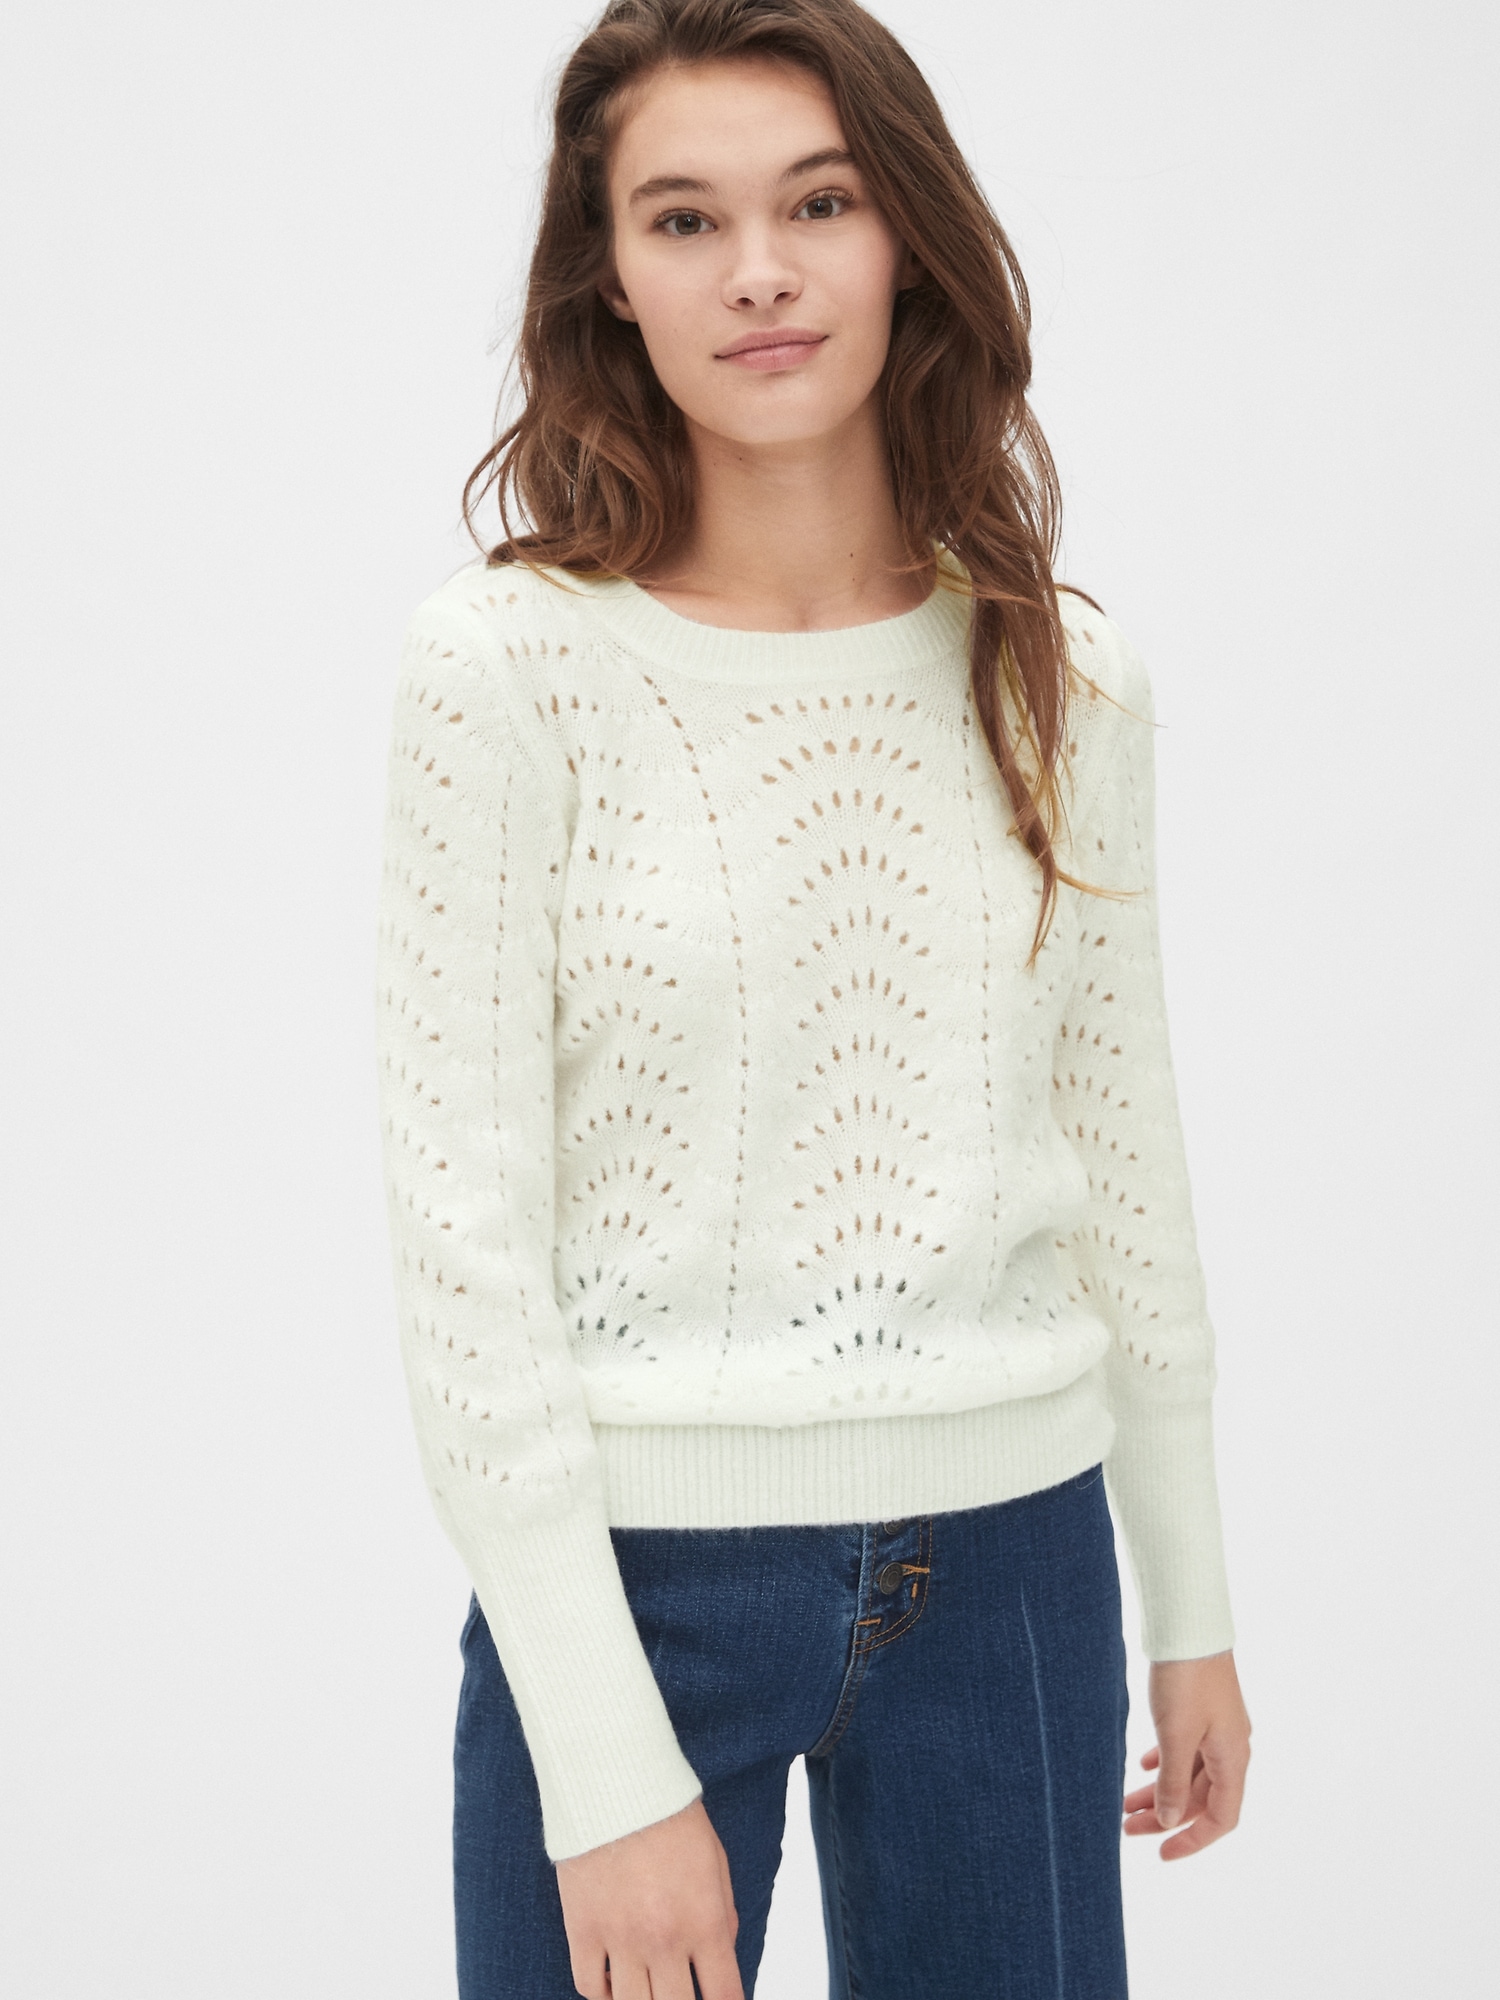 Pointelle Crewneck Sweater | Gap